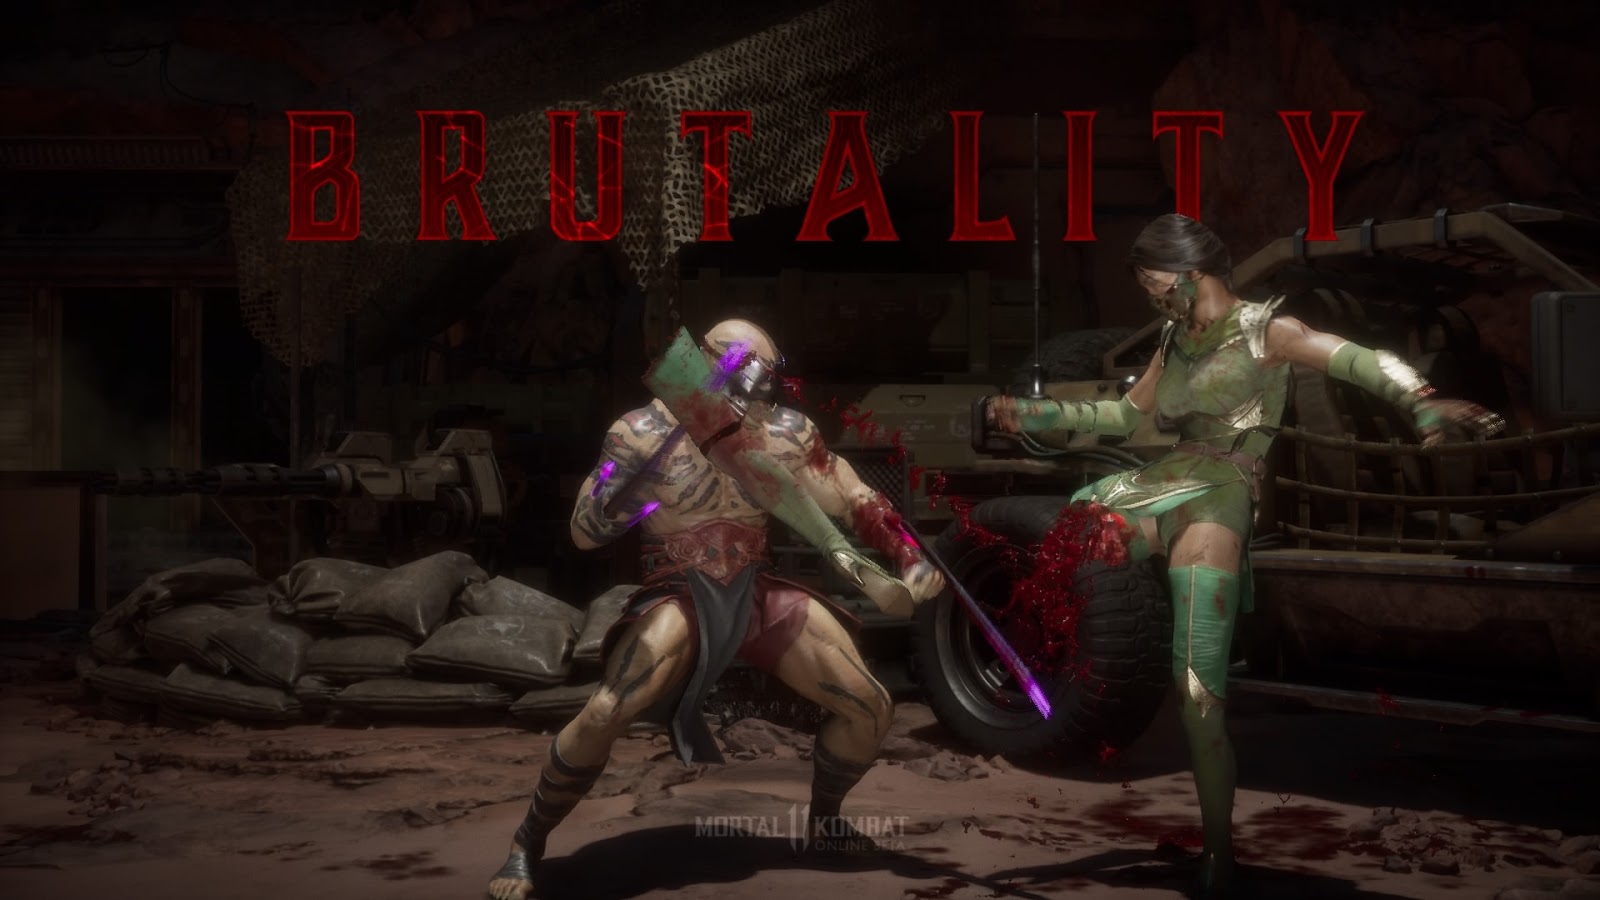 Kung Lao entra para lista de personagens de Mortal Kombat X - GameBlast